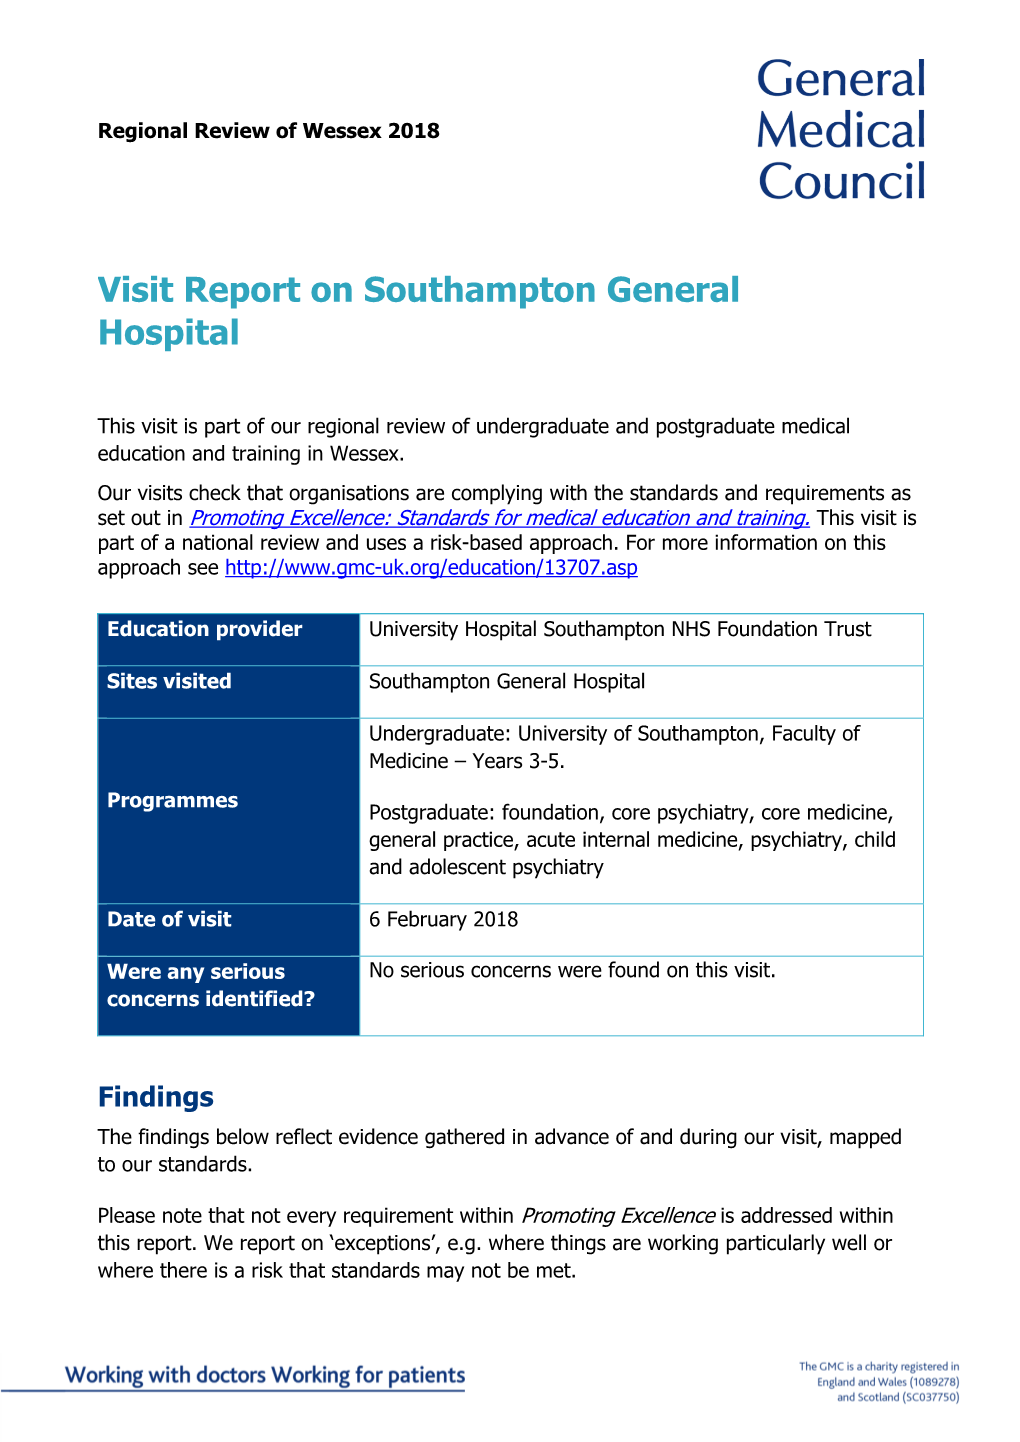 Visit Report on Southampton General Hospital